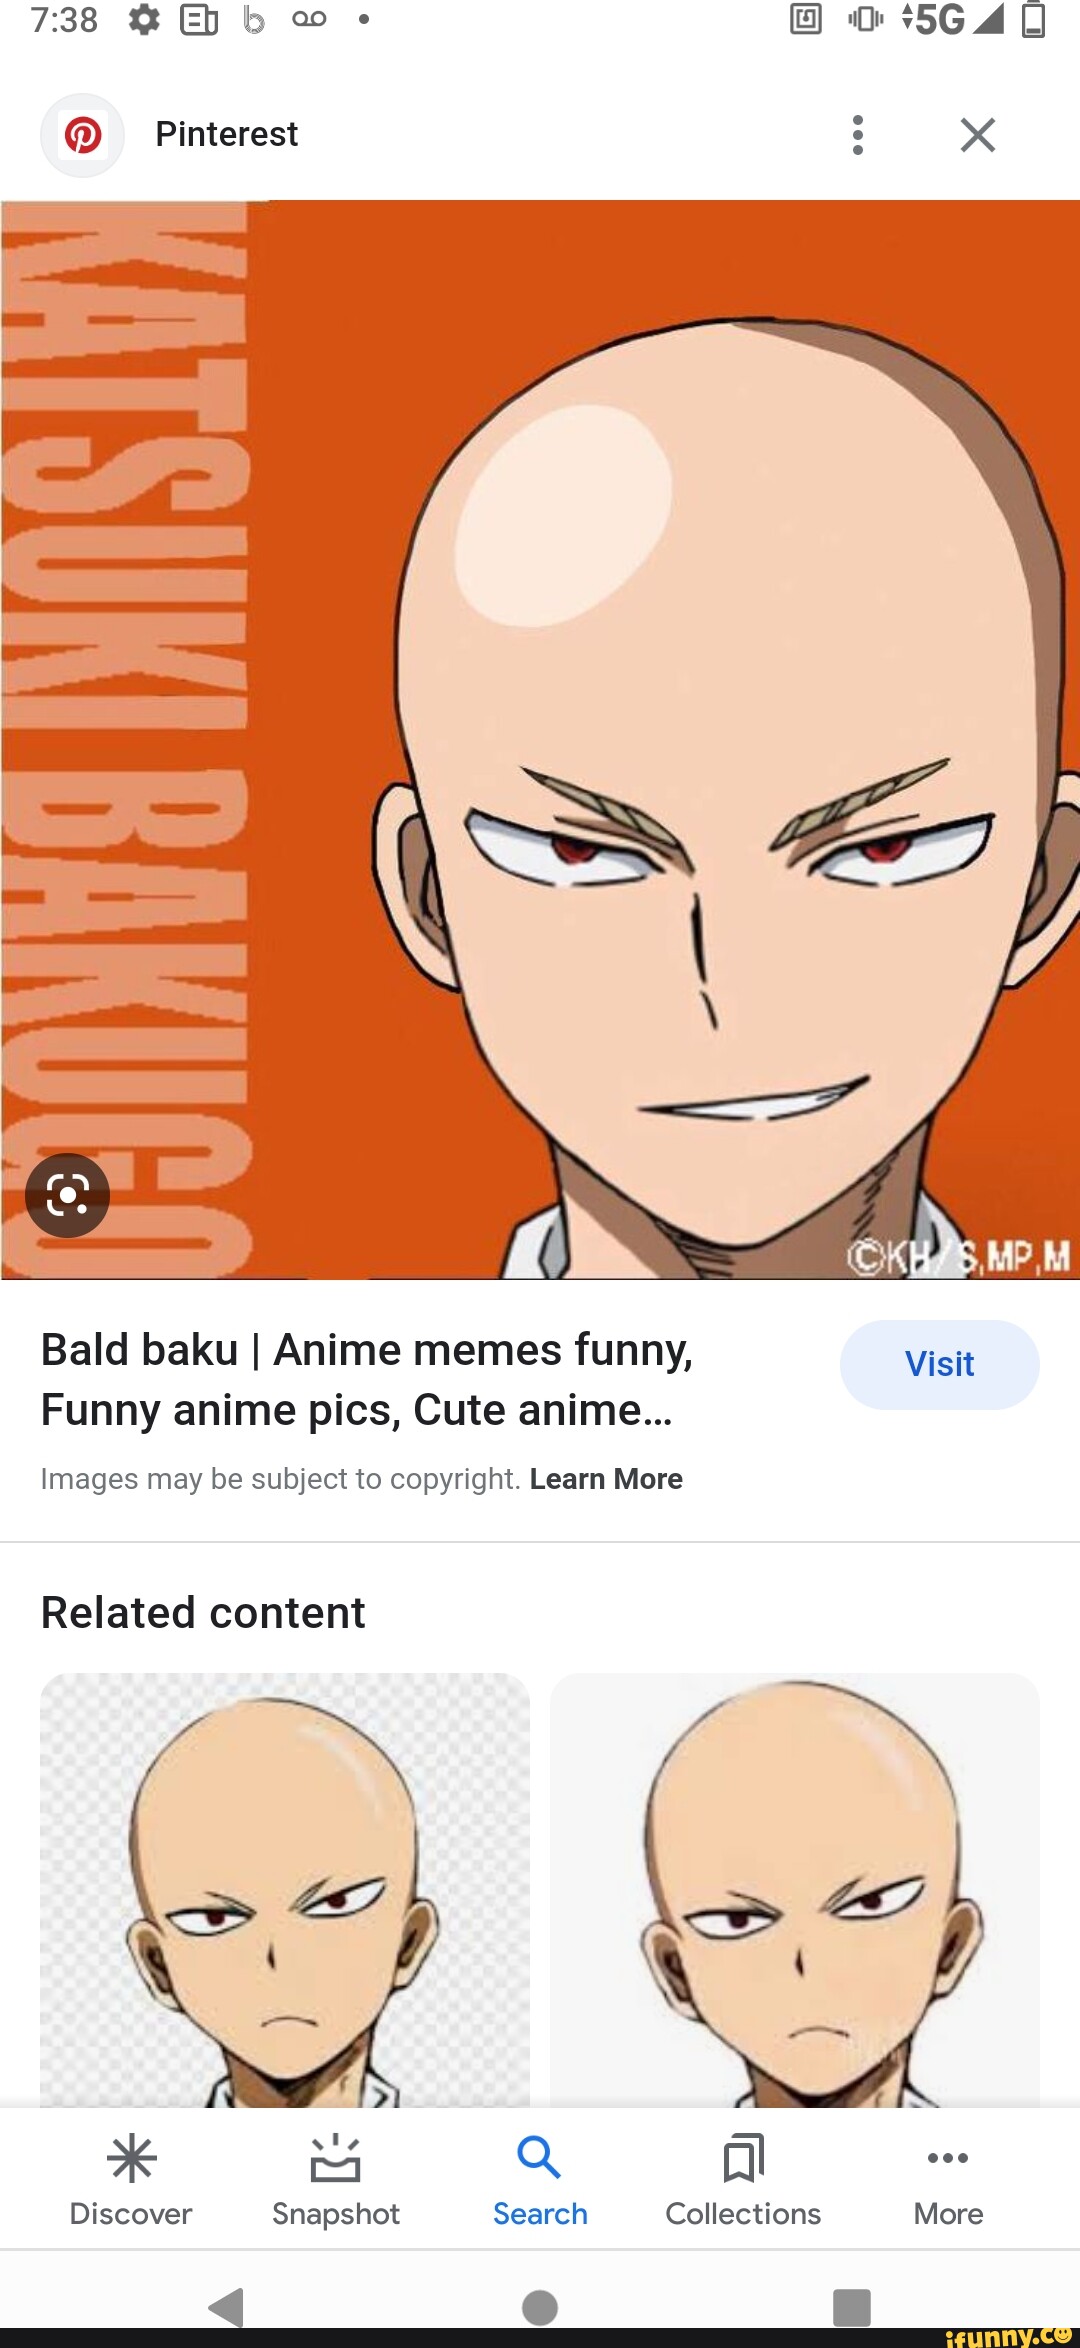 XxX Pinterest by Bald baku I Anime memes funny, Visit Funny anime pics,  Cute anime Images